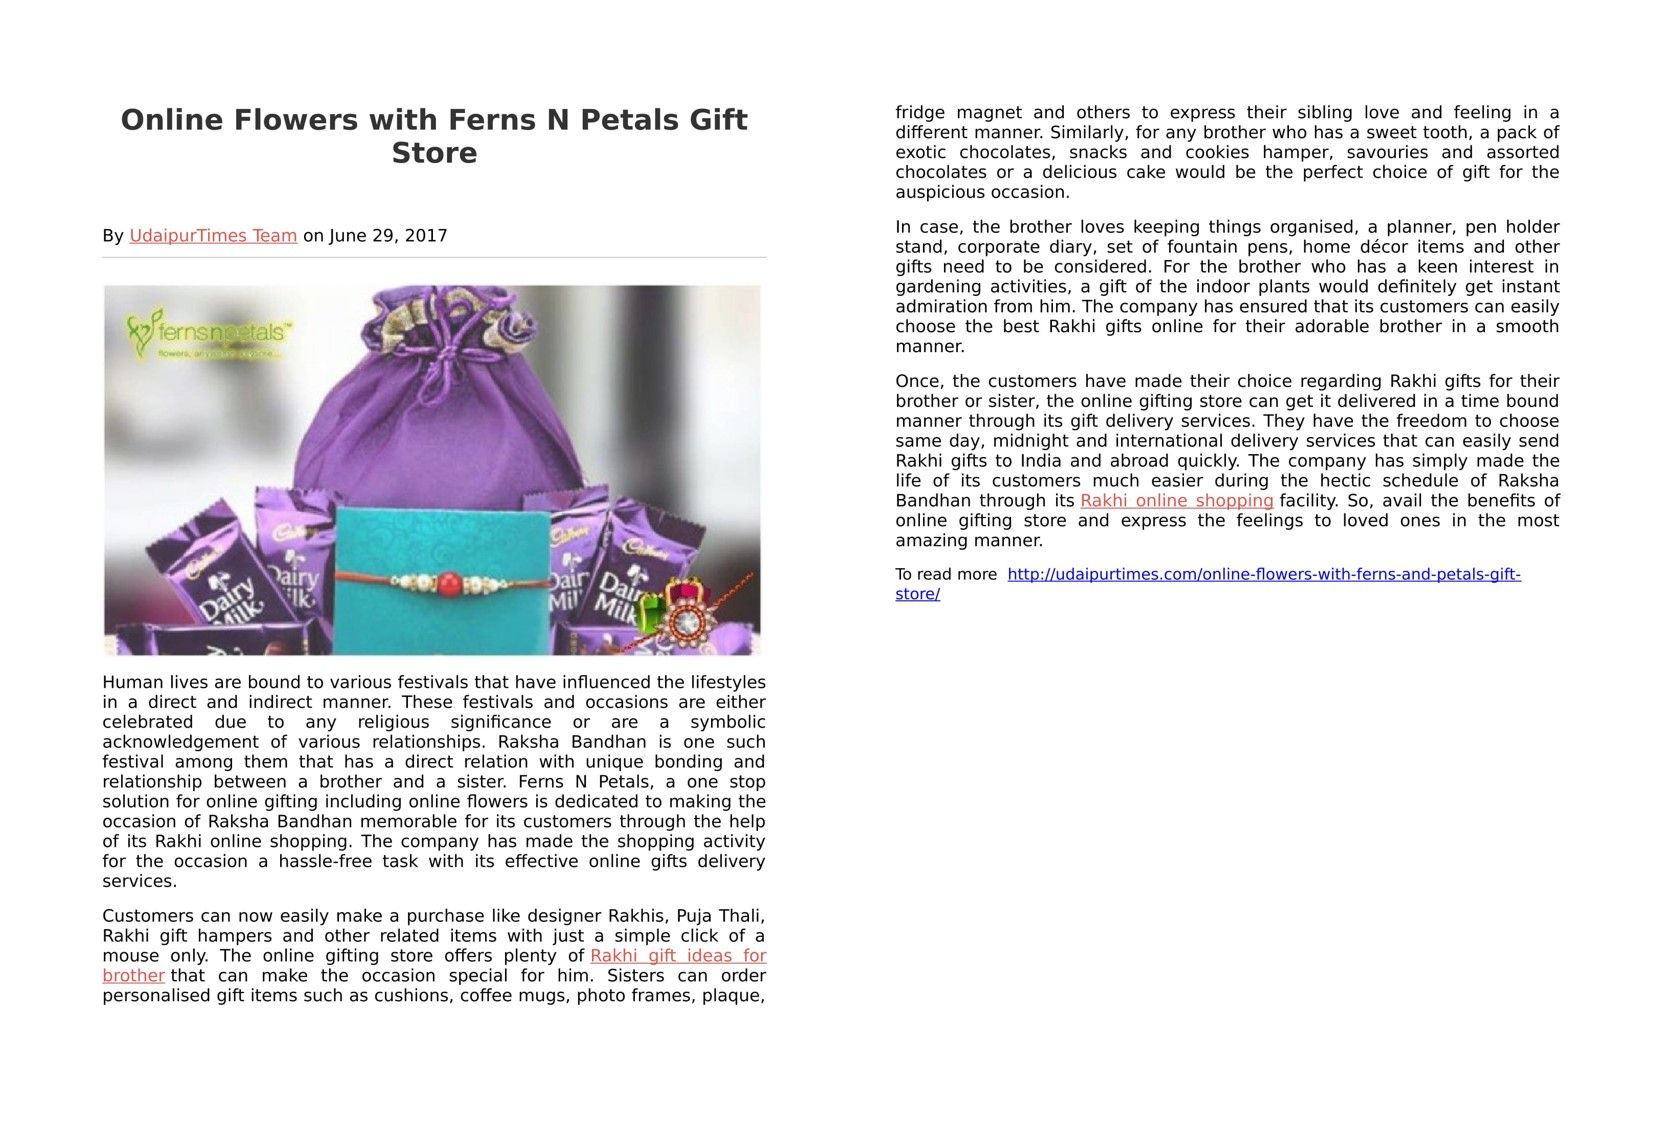 Diwali Gift Box - Ferns N Petals Price - Buy Online at Best Price in India